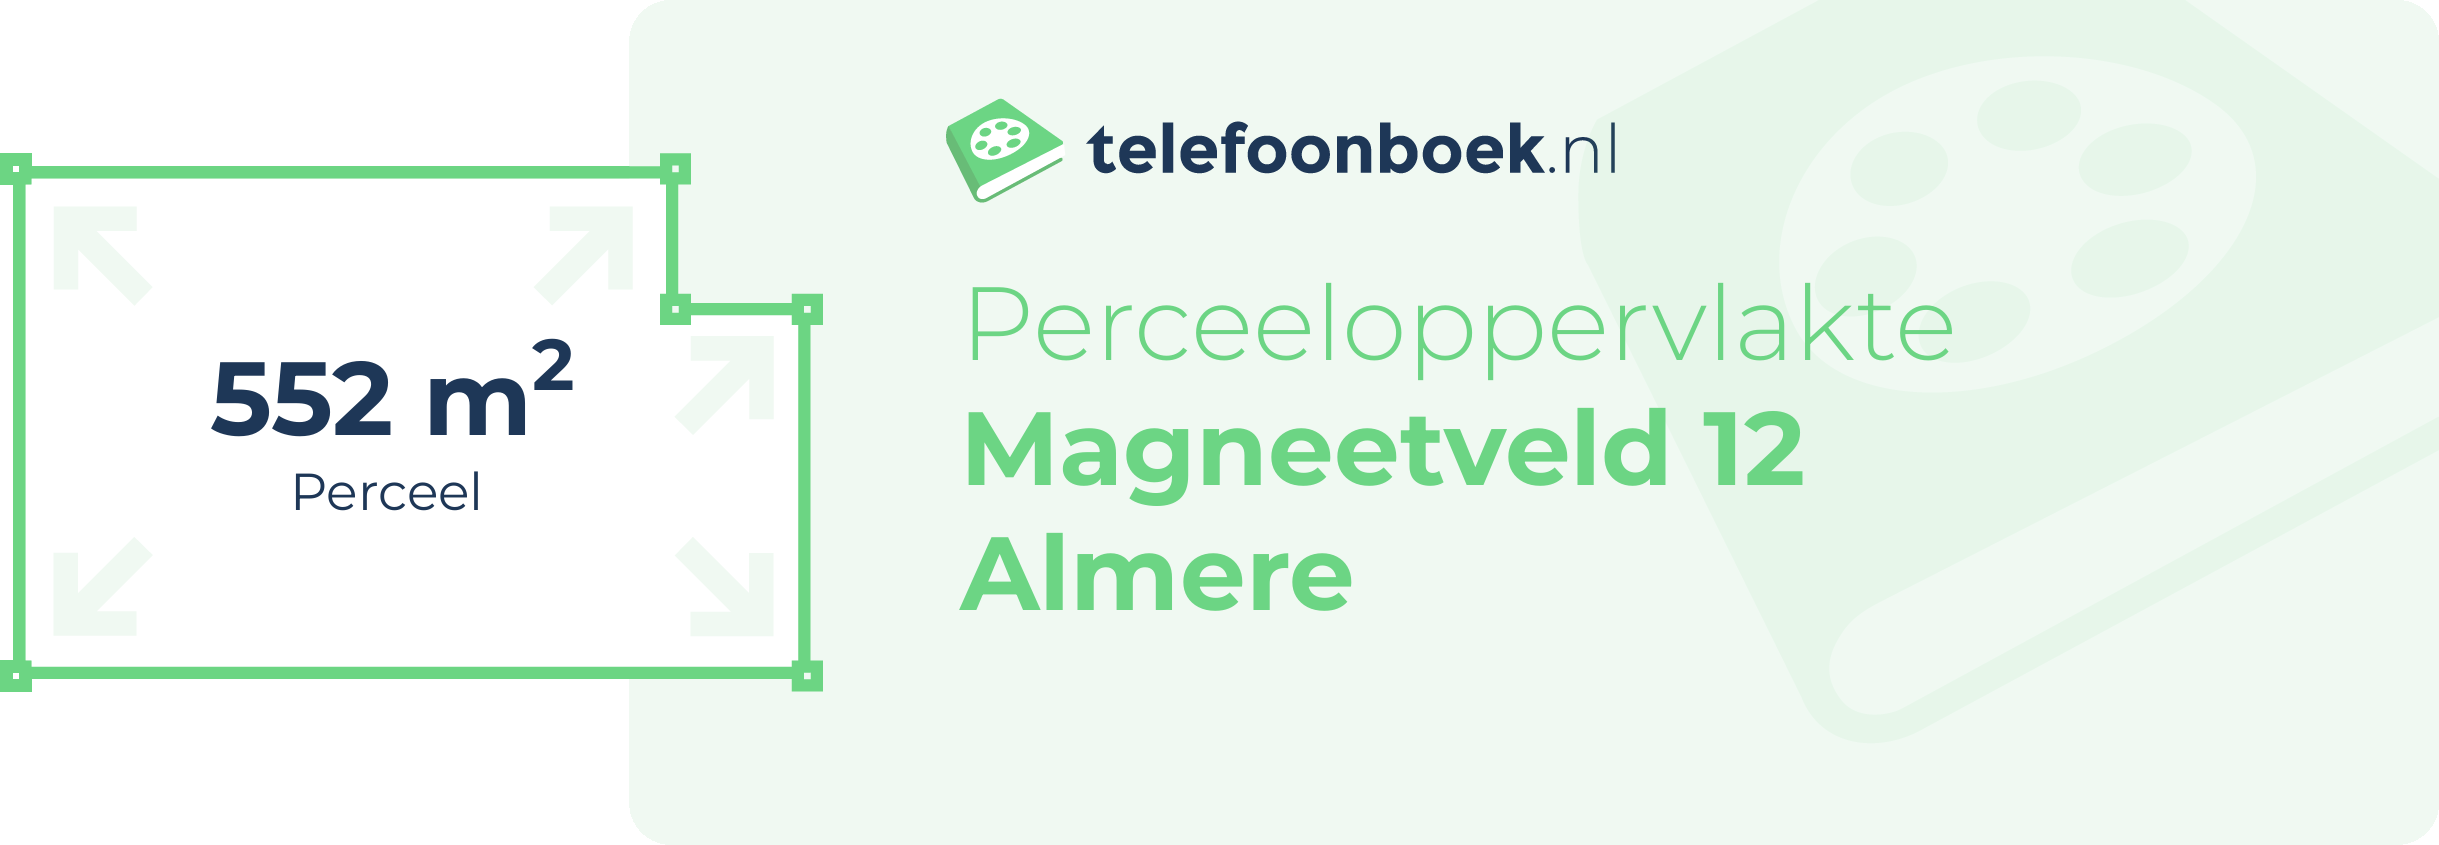 Perceeloppervlakte Magneetveld 12 Almere